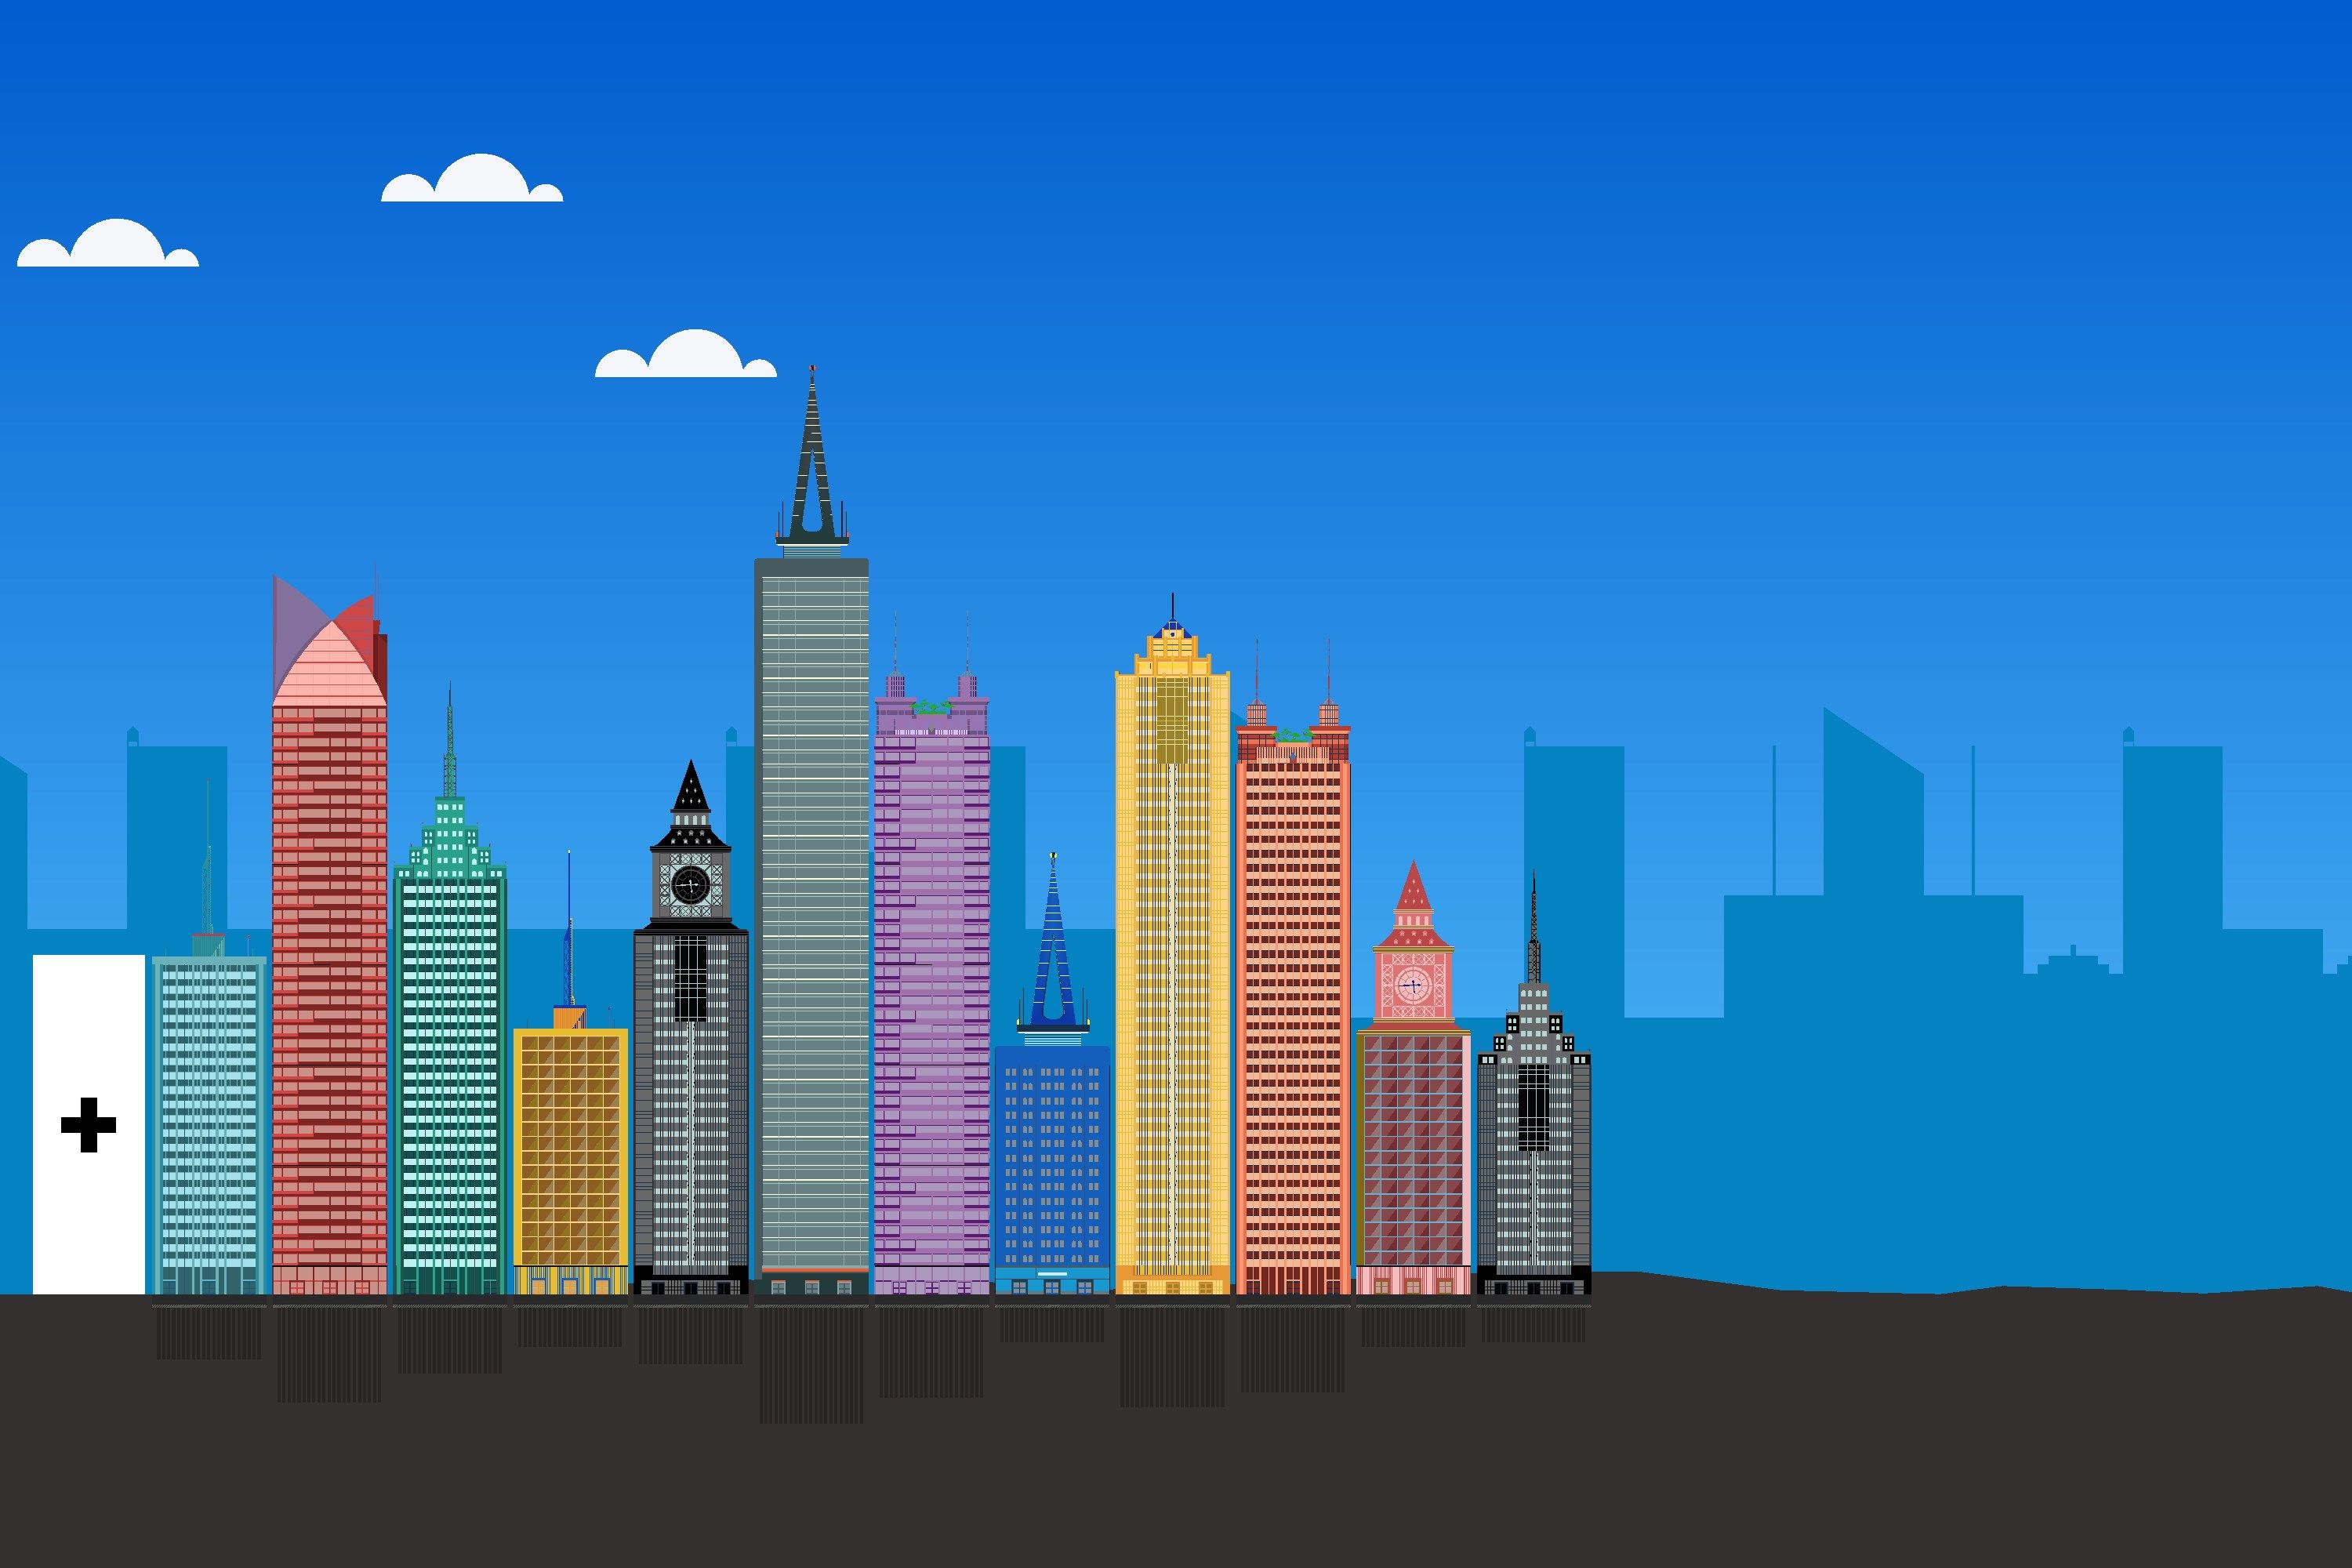 Skyscrapers by Tinybop